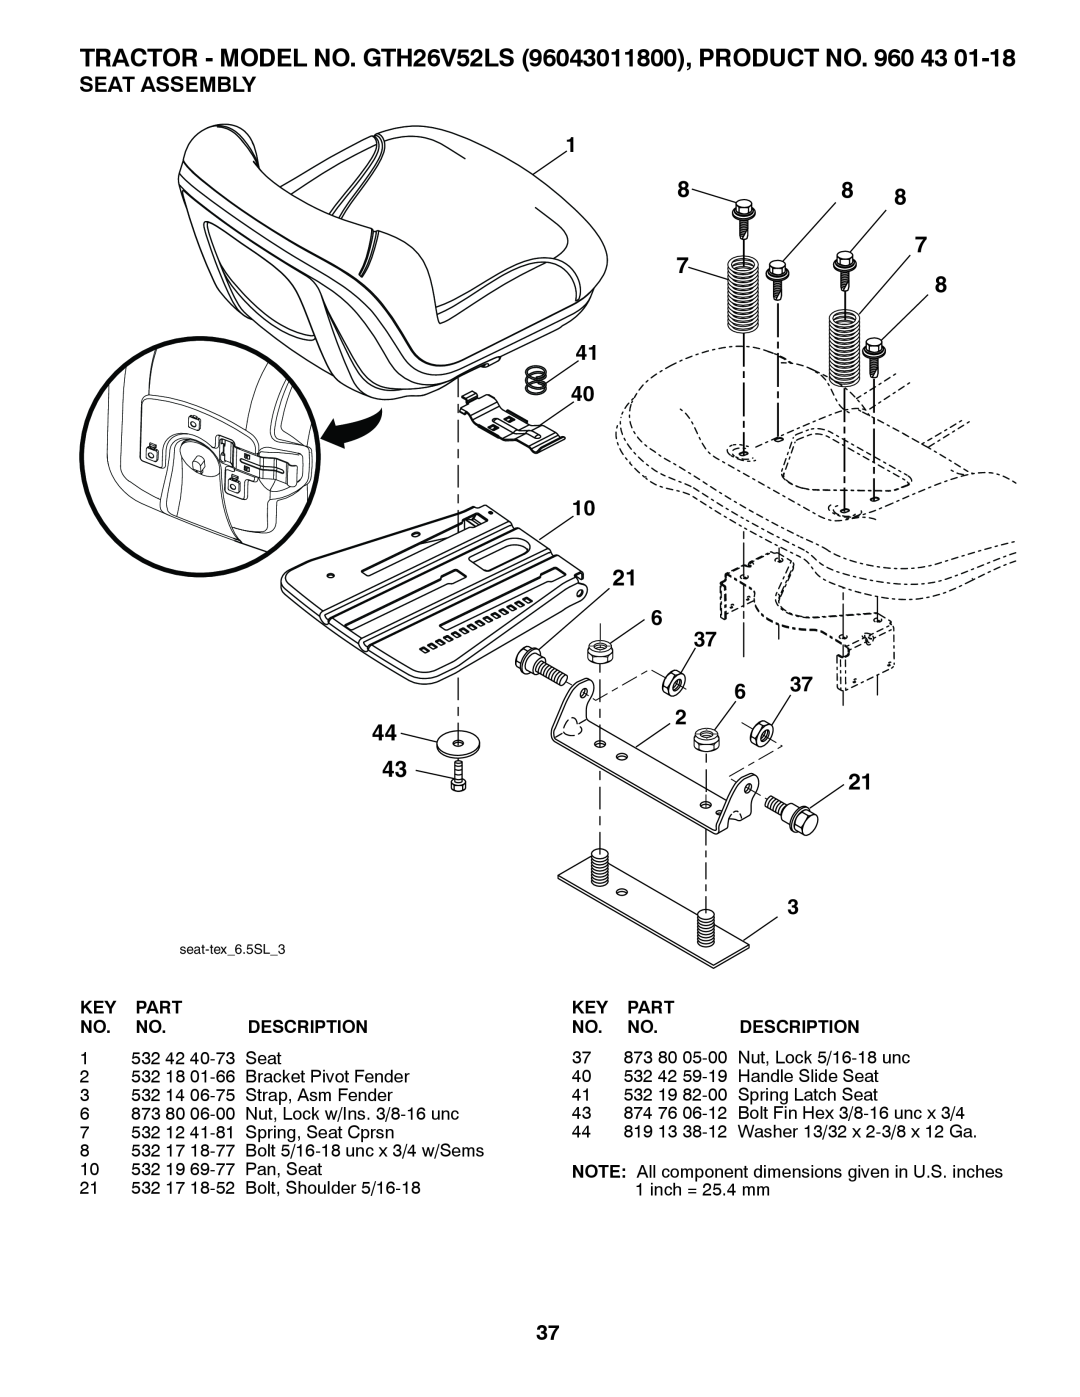 Husqvarna owner manual Seat Assembly, TRACTOR - MODEL NO. GTH26V52LS 96043011800, PRODUCT NO. 960 43, Part, Description 